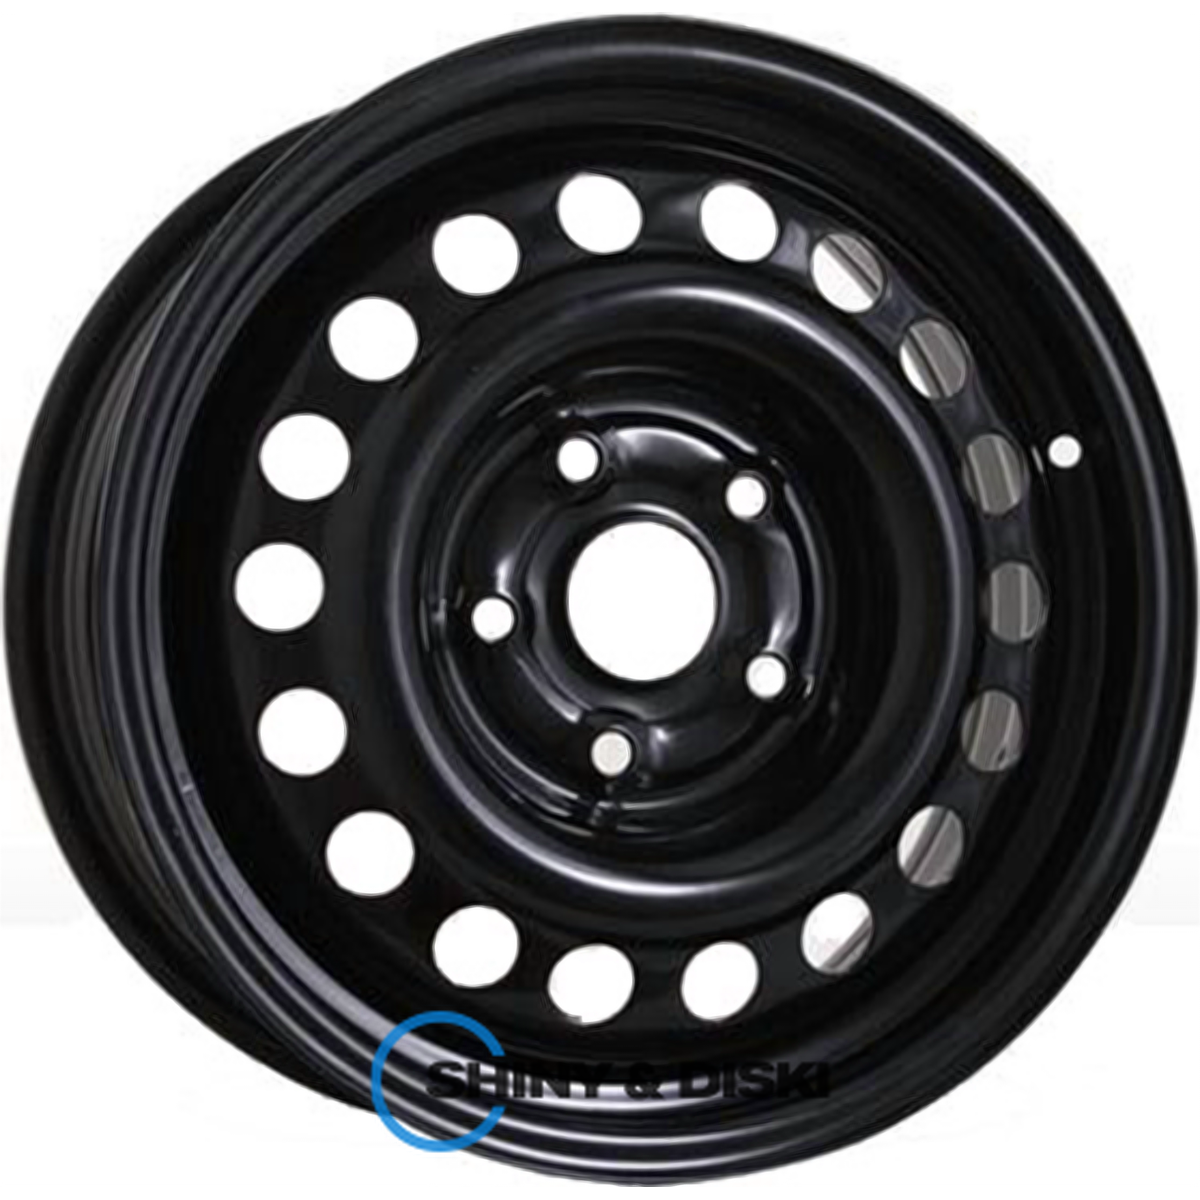 magnetto wheels 15004 b